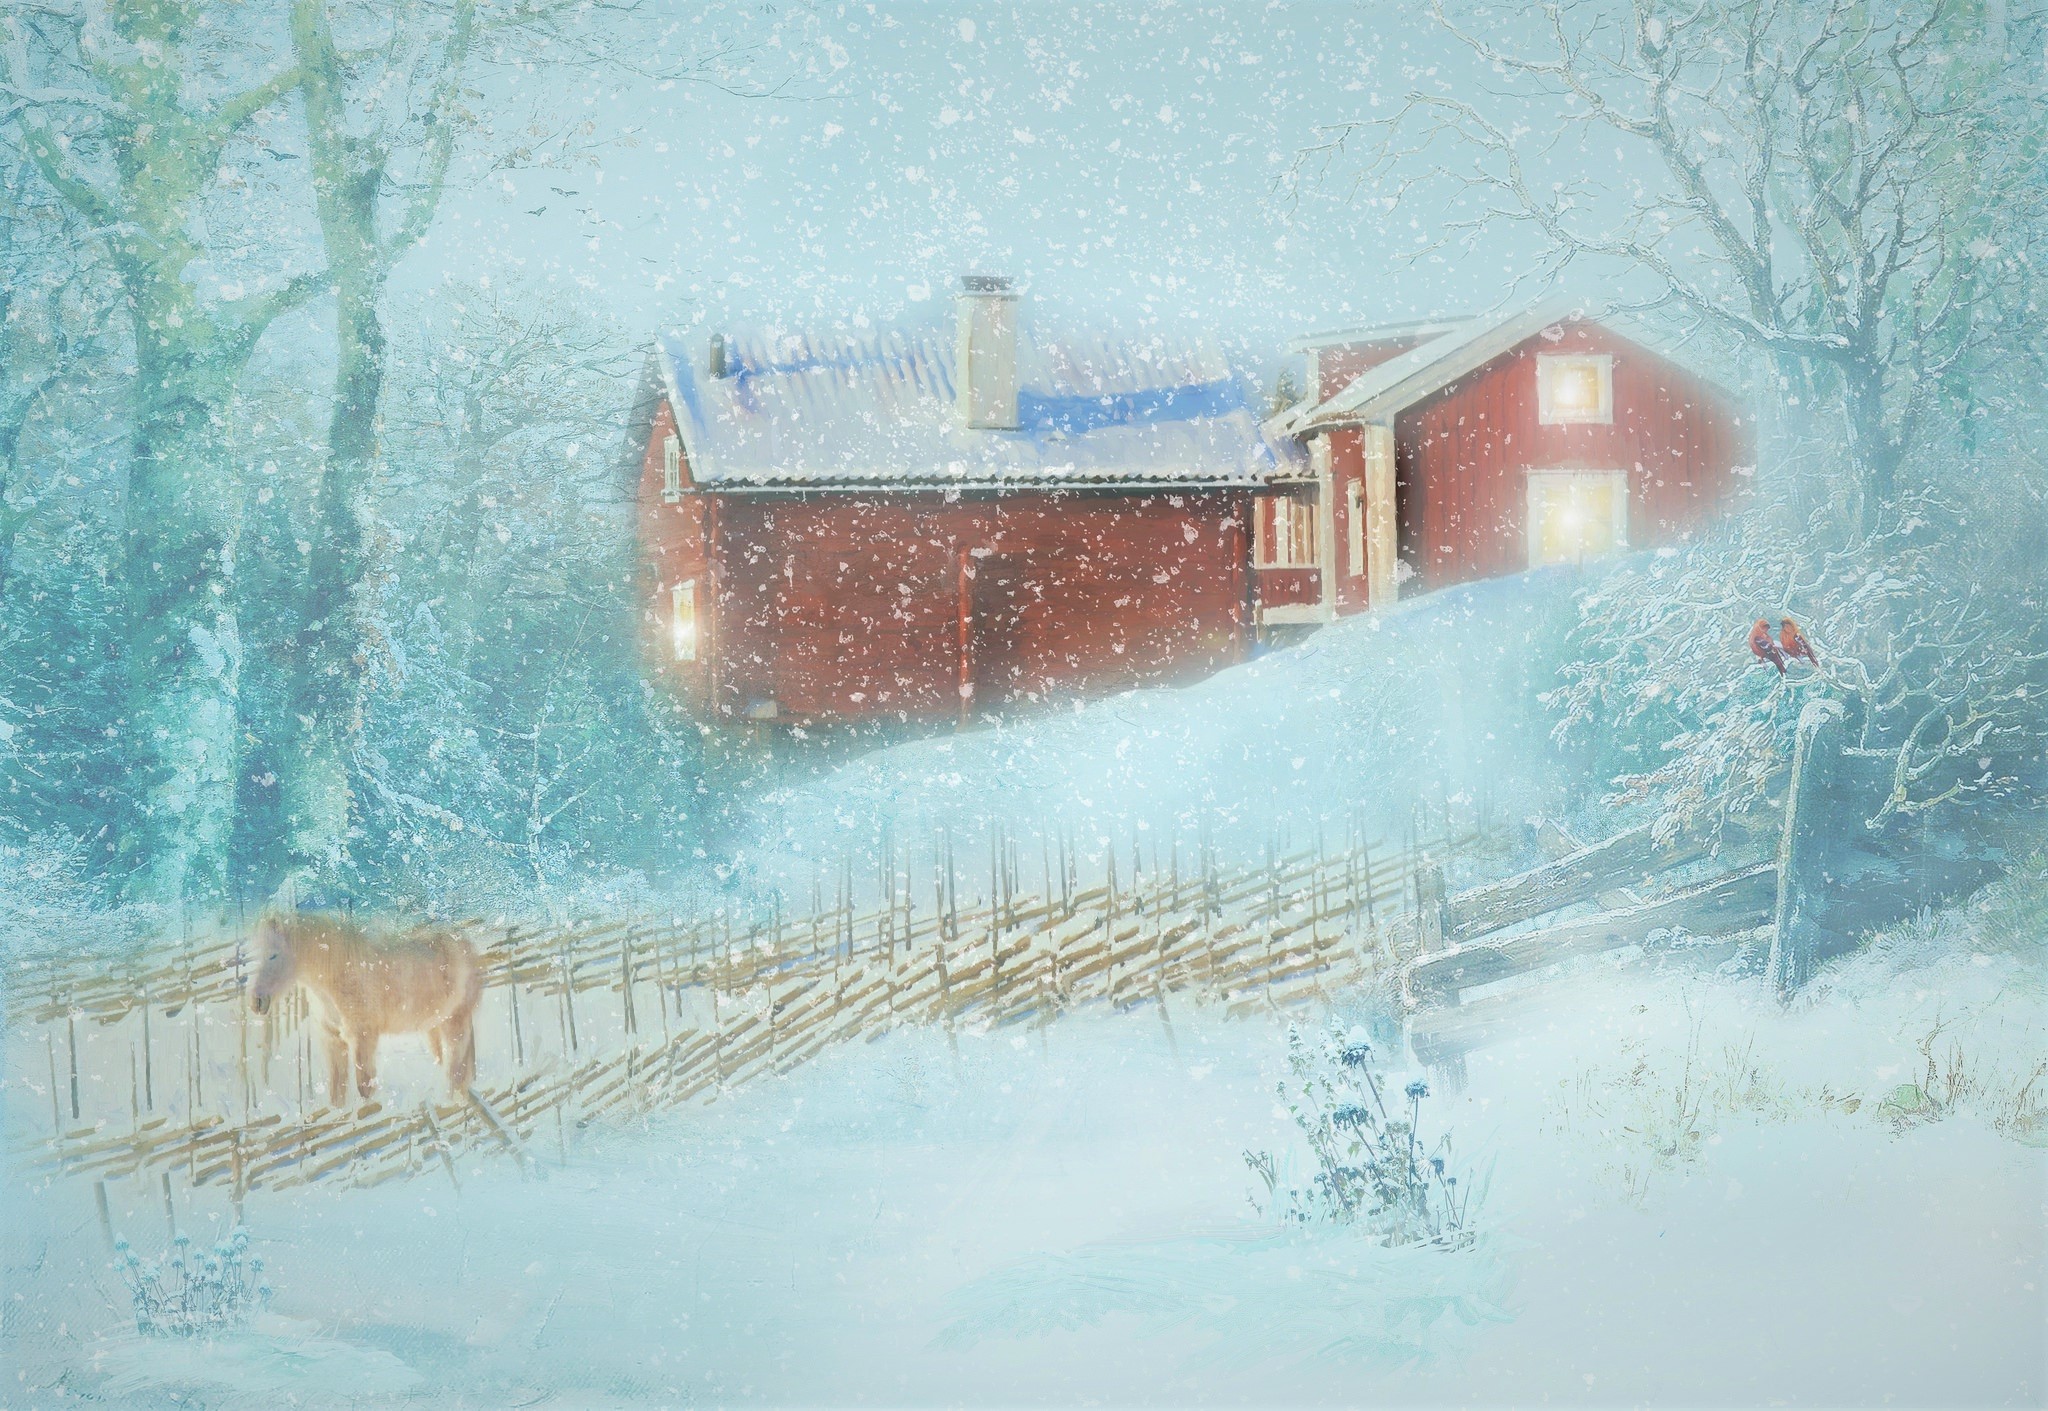 House Country Winter Snow Snowfall Fence Cardinal Donkey 2048x1411